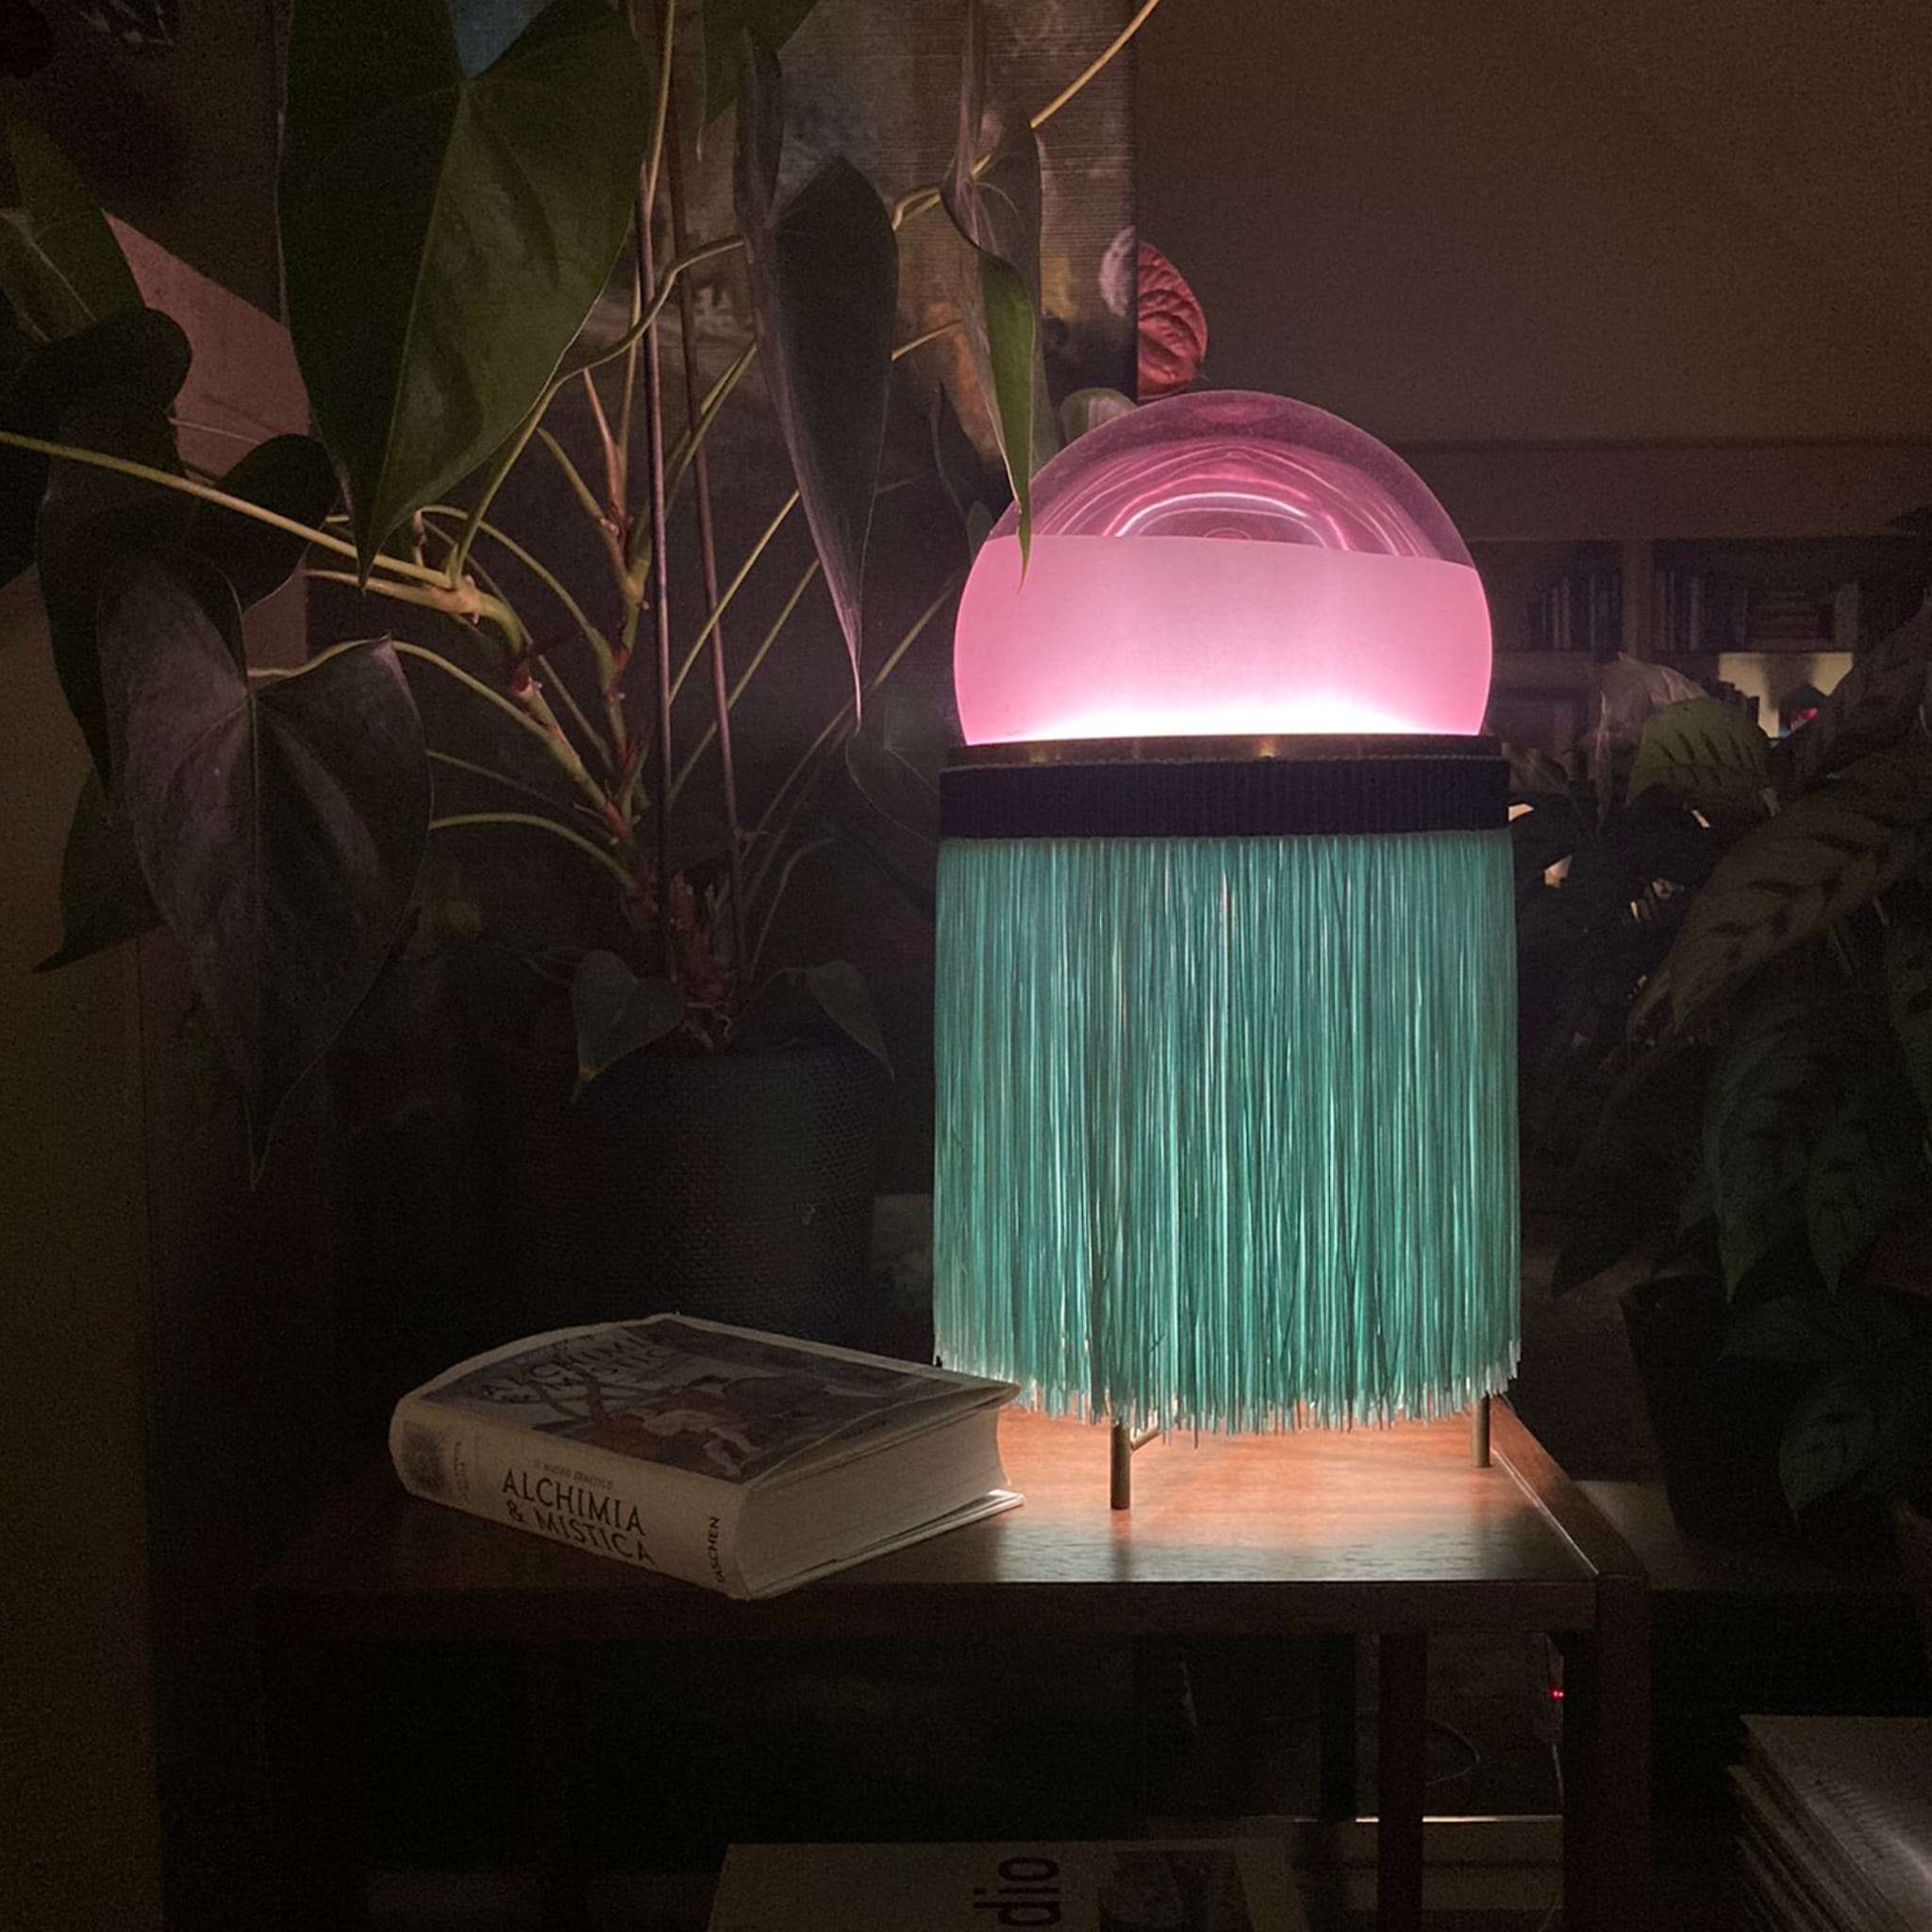 Normanna Medium Floor Lamp in Amethyst Pink and Aqua Green by Vi+M - Alternative view 2